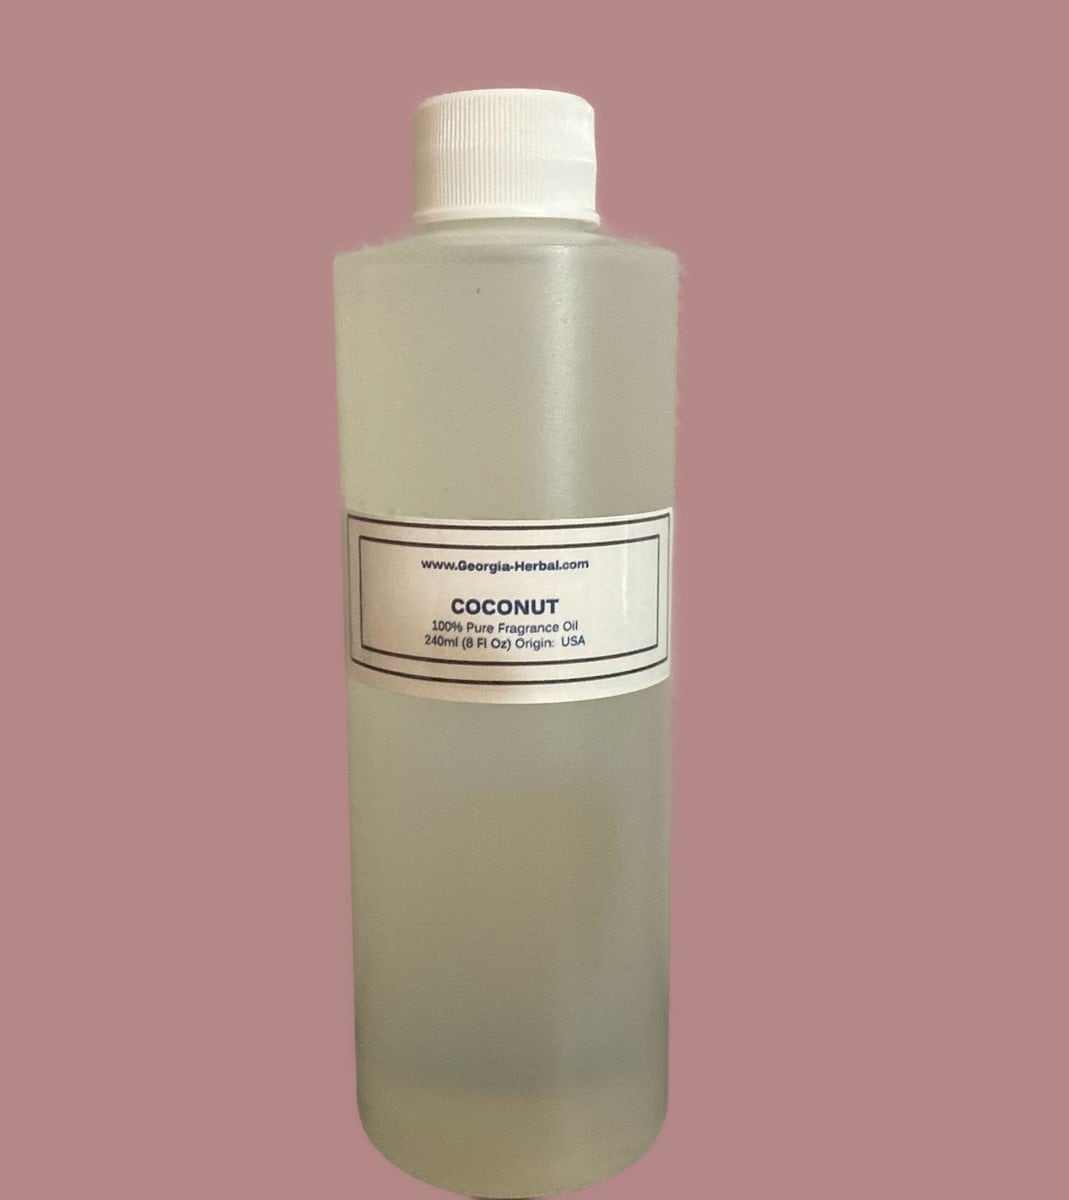 White Coconut Fragrance Oil